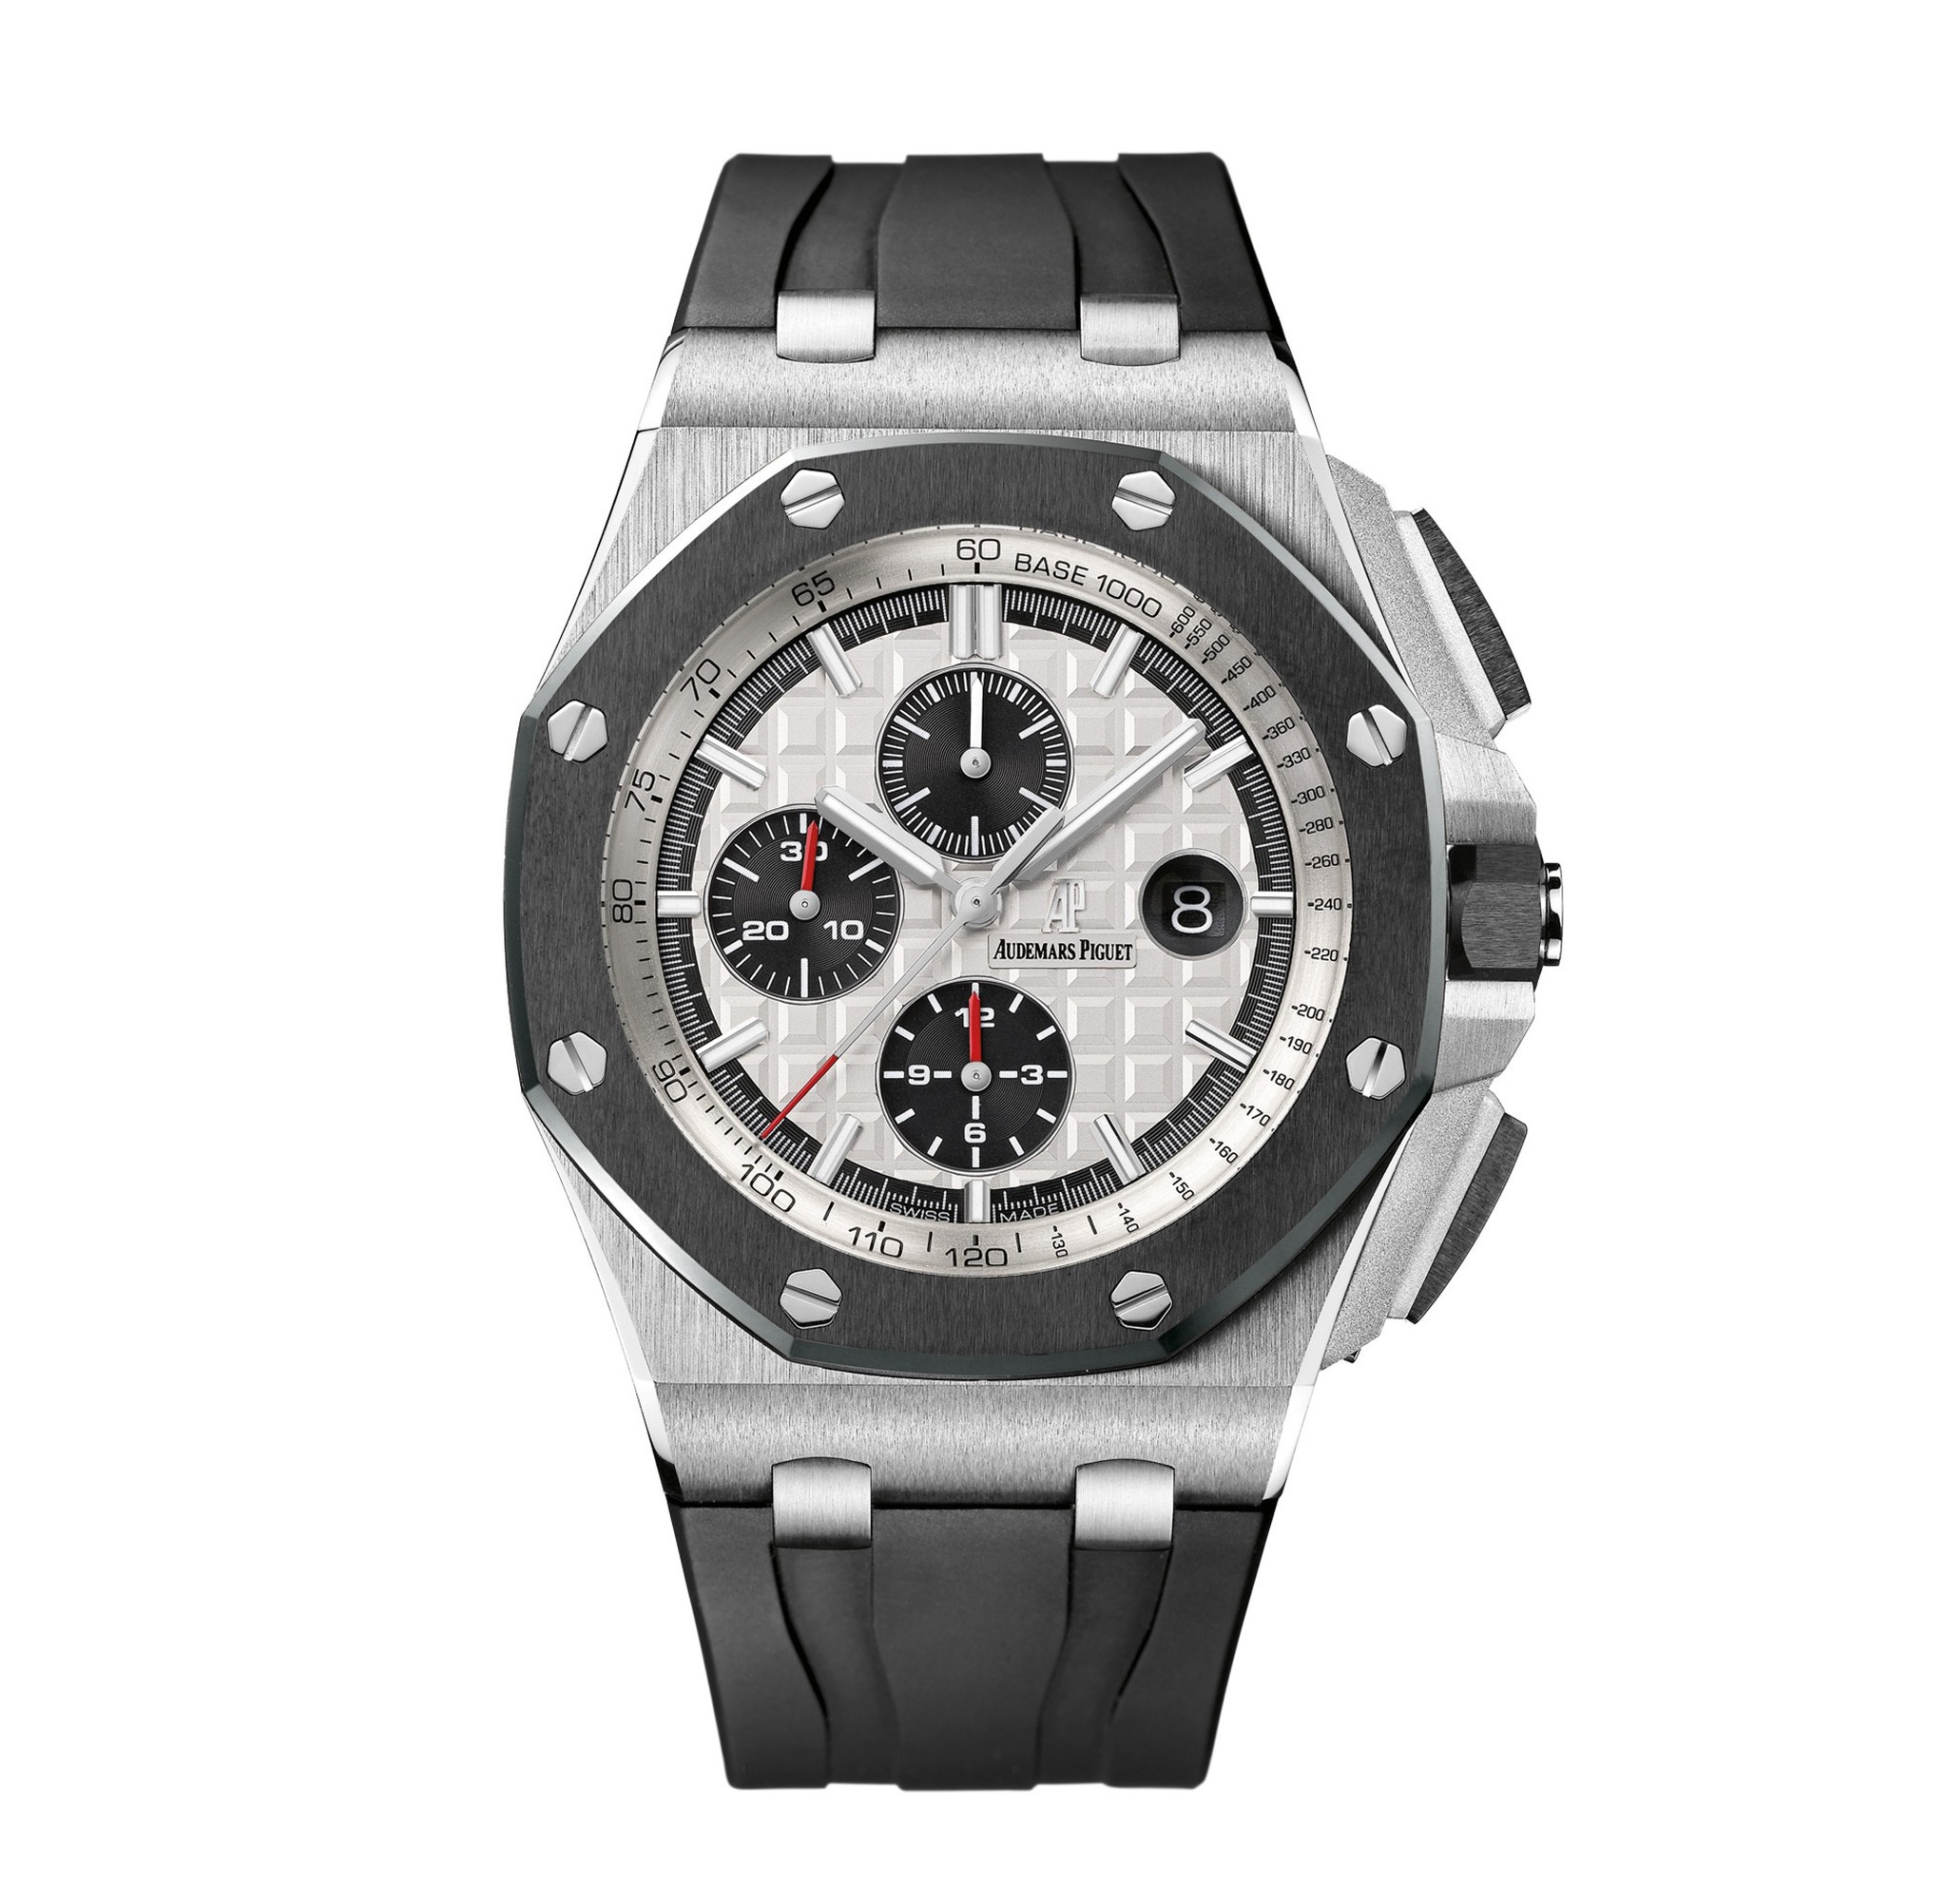 Audemars Piguet Royal Oak Offshore 44mm Steel watch REF: 26400SO.OO.A002CA.01